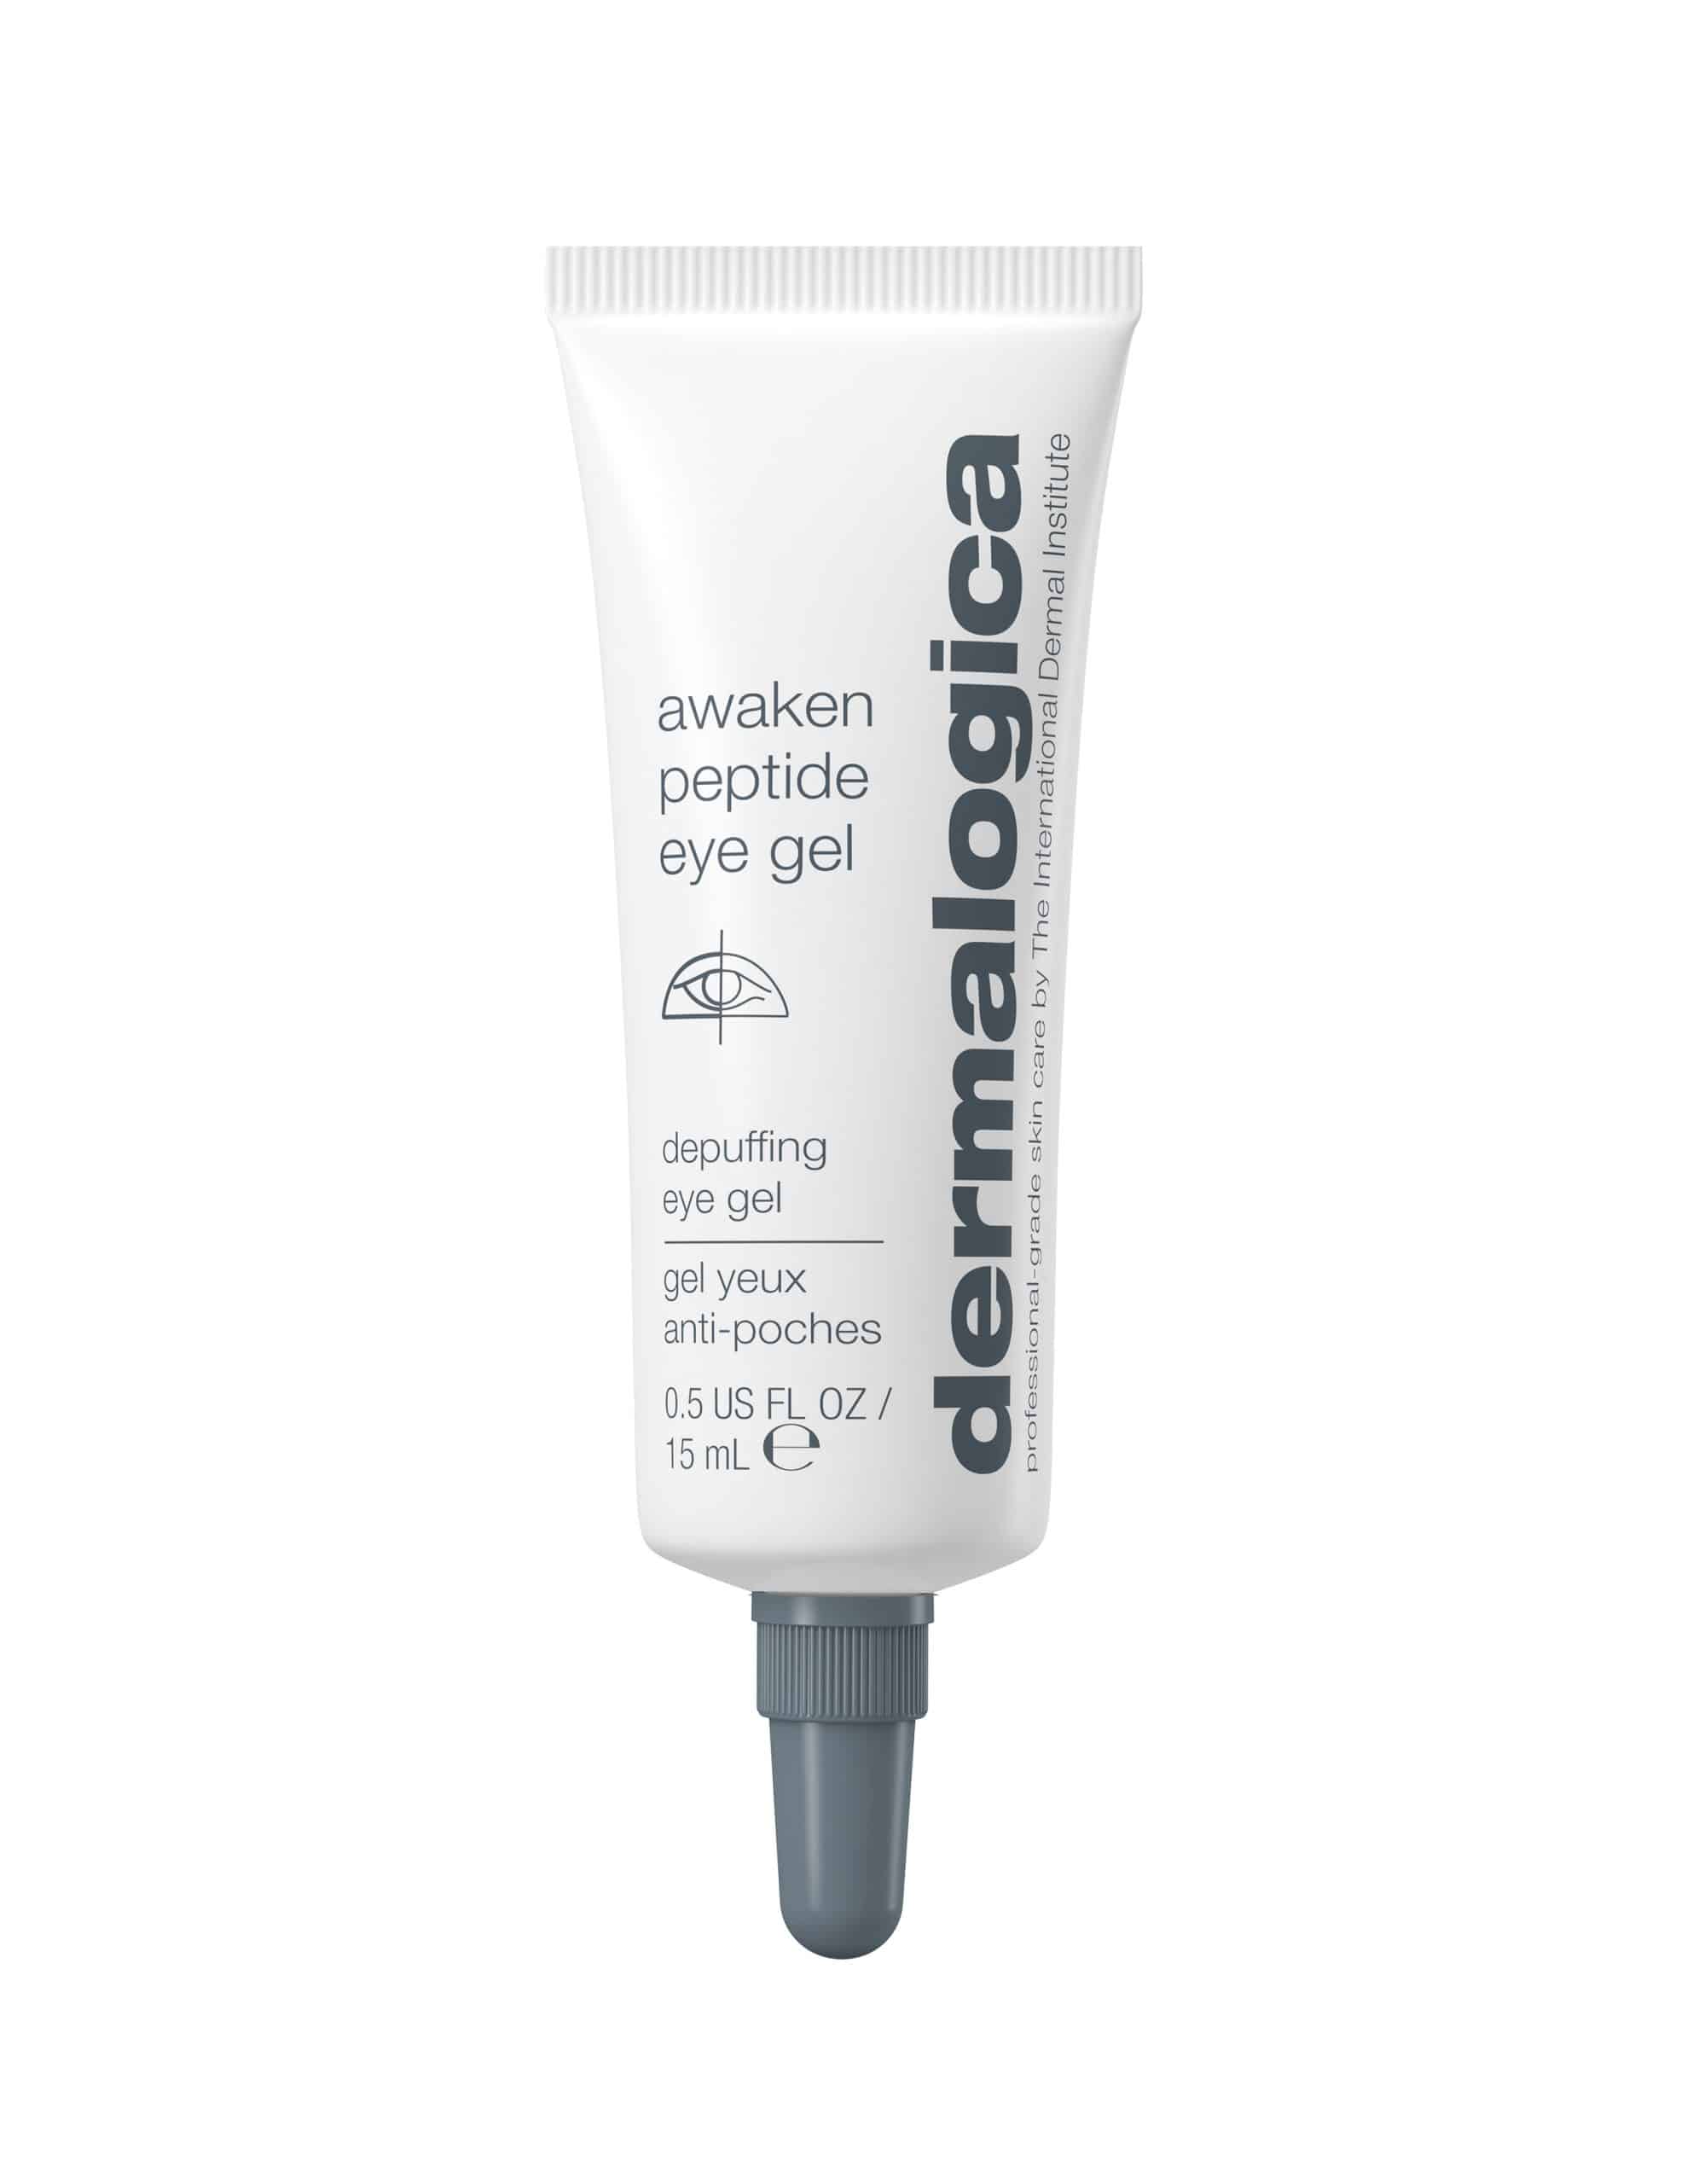 0.5 oz retail tube front ecomm image awaken peptide eye gel 1